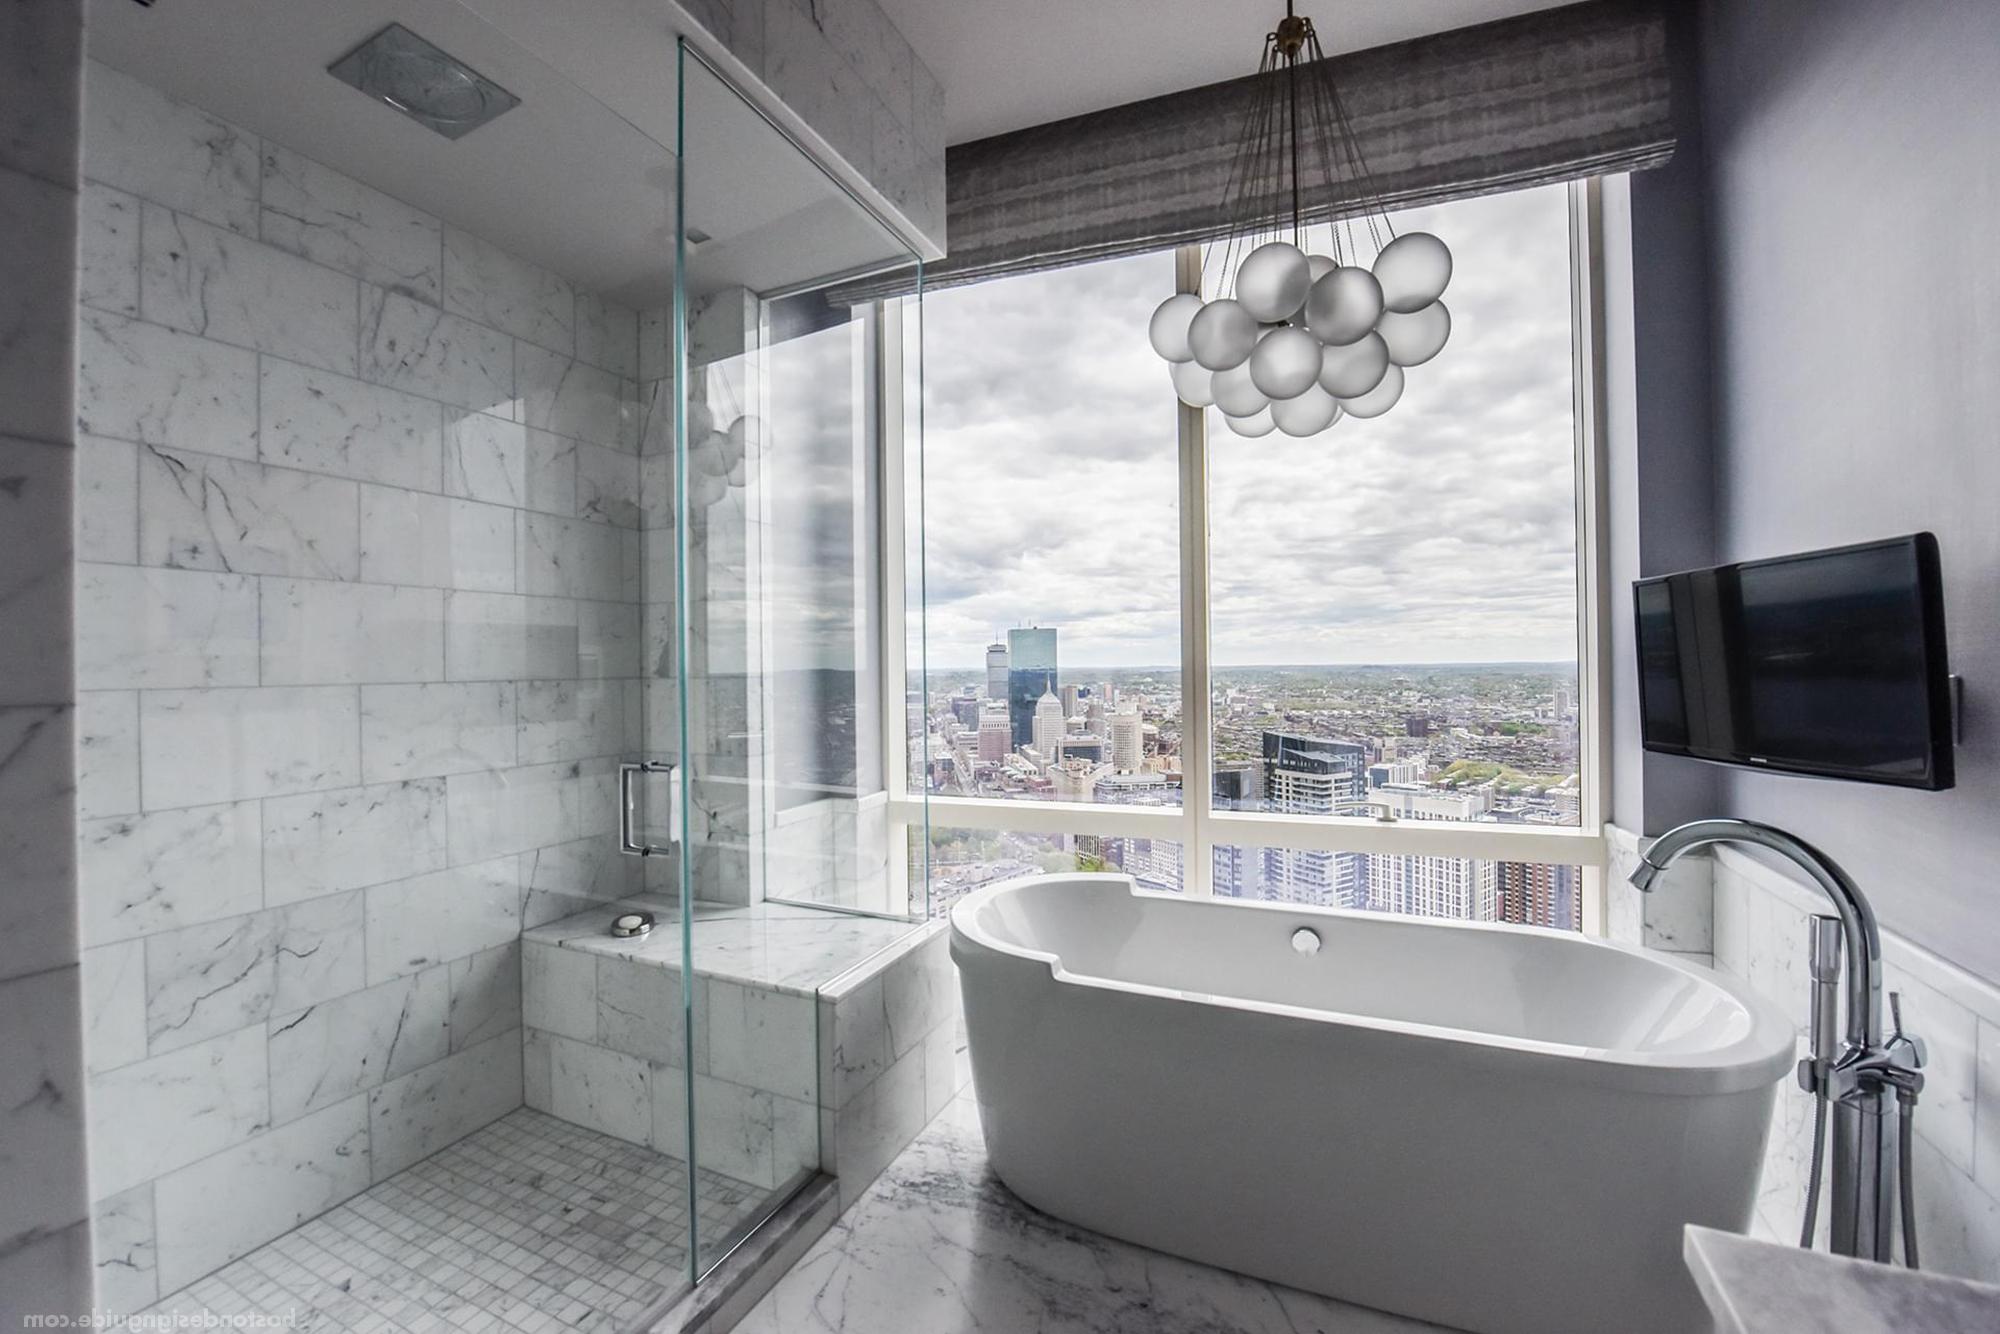 Boston high-rise bathroom by Sleeping Dog Properties